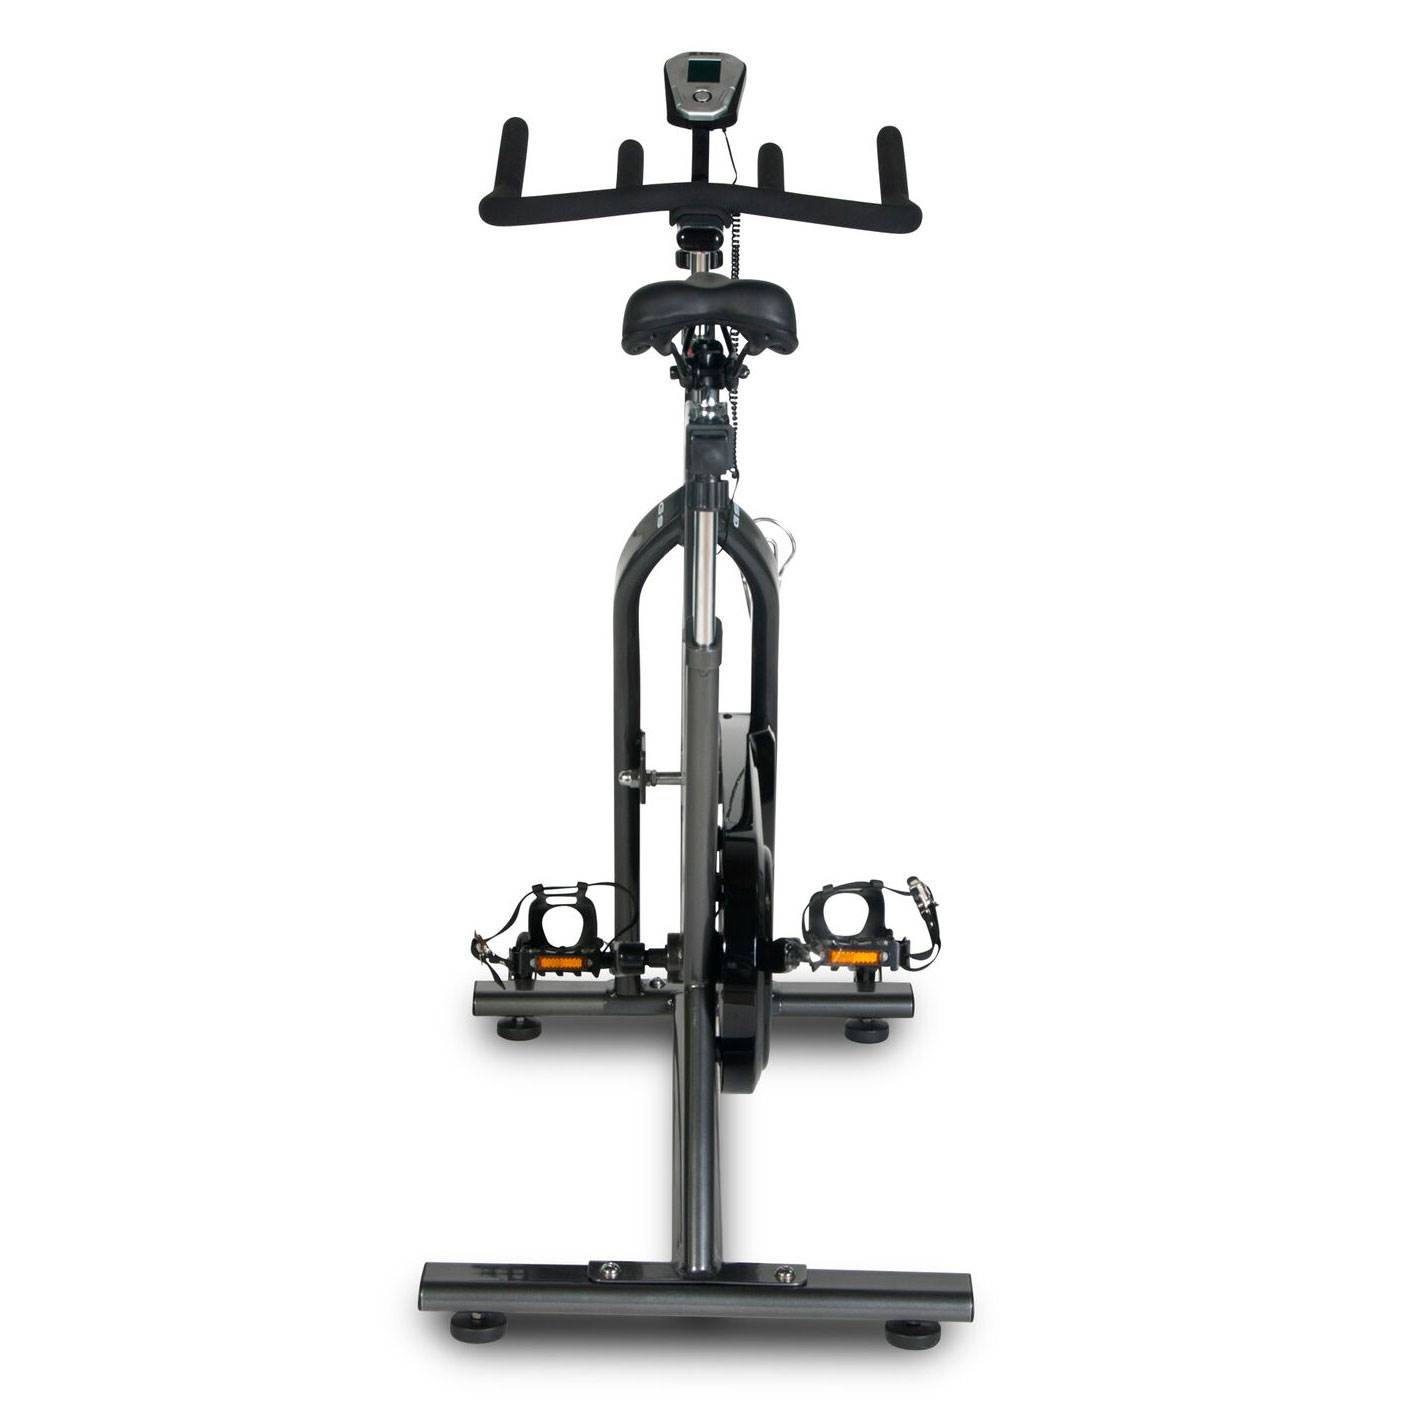 Bladez Echelon GS Stationary Indoor Cardio Exercise Fitness Bike (For Parts) 835126203109 | eBay